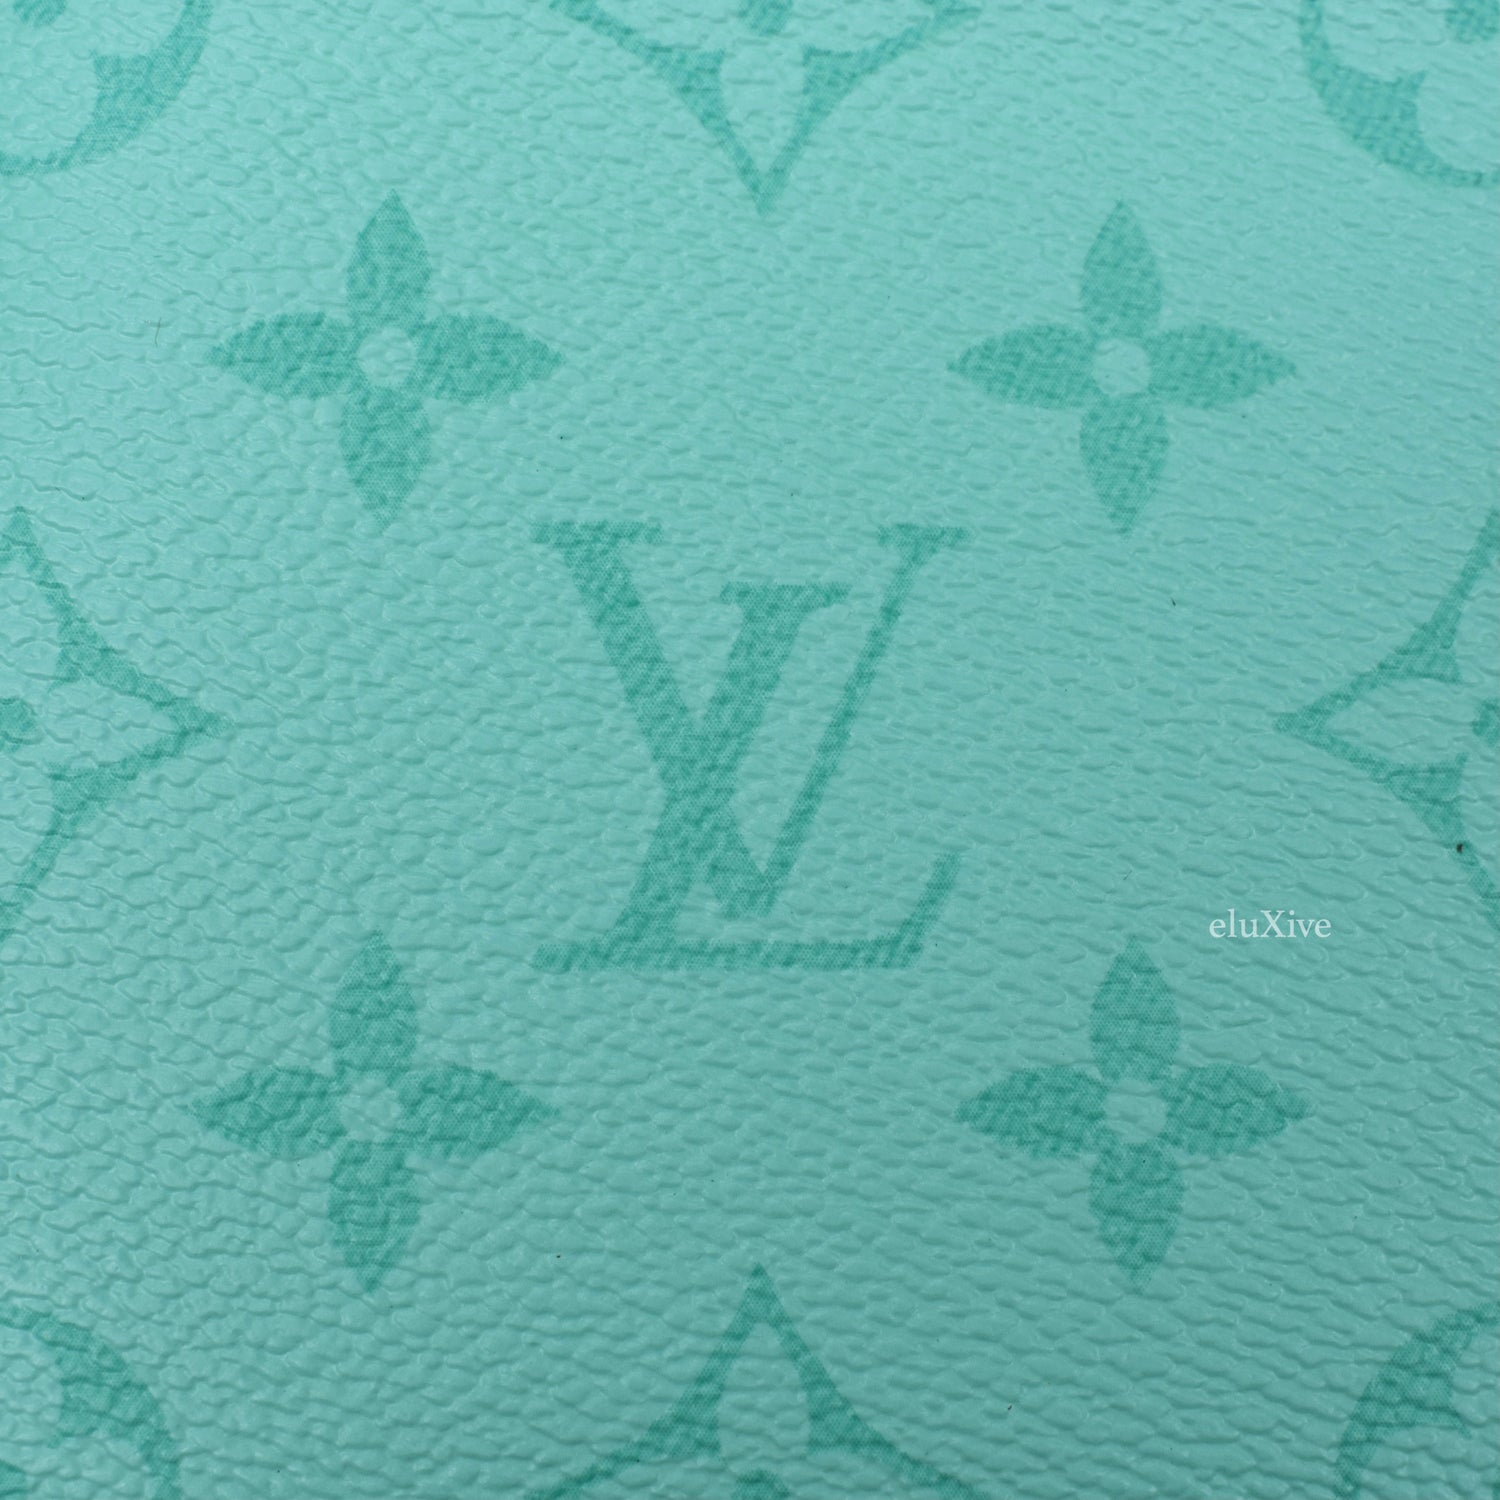 Louis Vuitton M30897 Multiple Wallet, Green, One Size